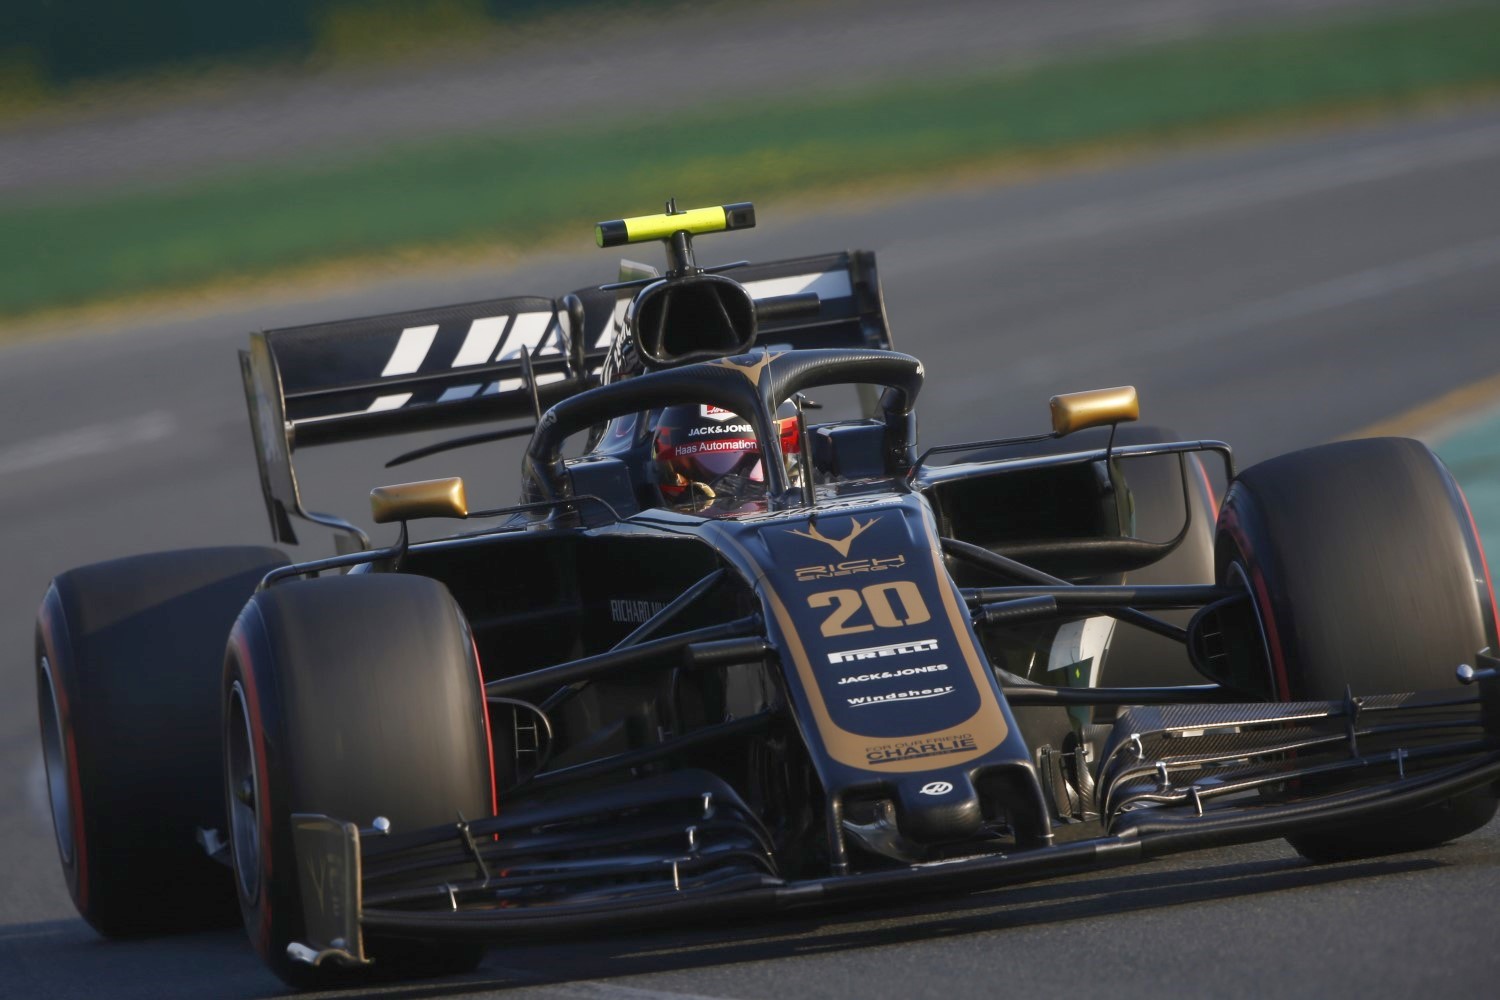 Magnussen's Haas is beating up on big teams like McLaren and Renault